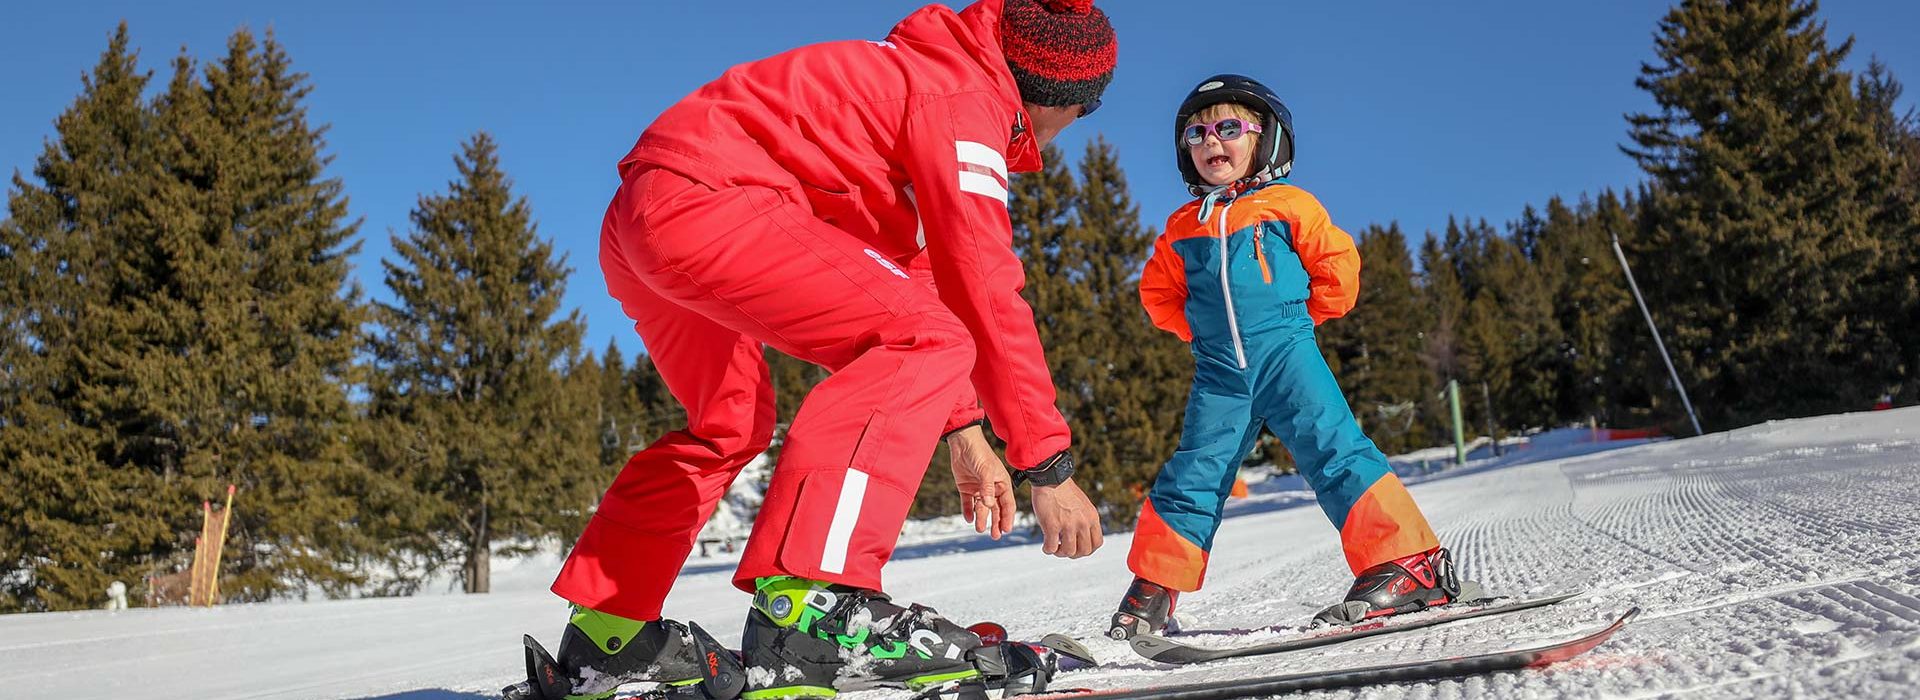 enfant débutant ski alpin